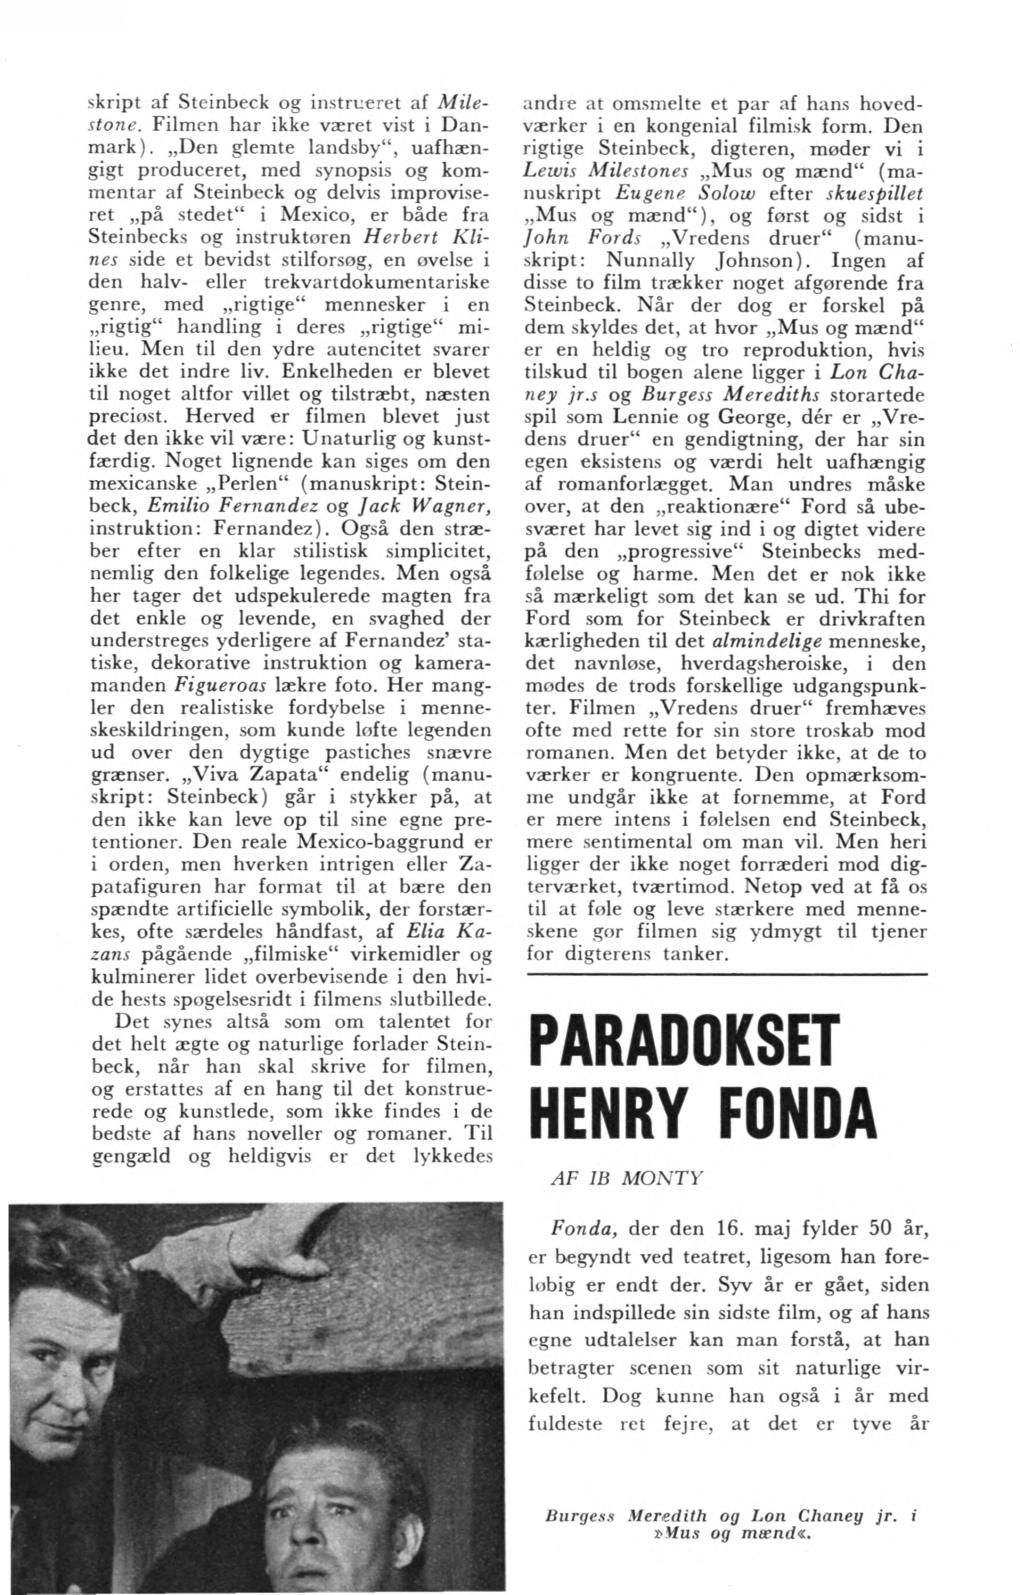 Paradokset Henry Fonda